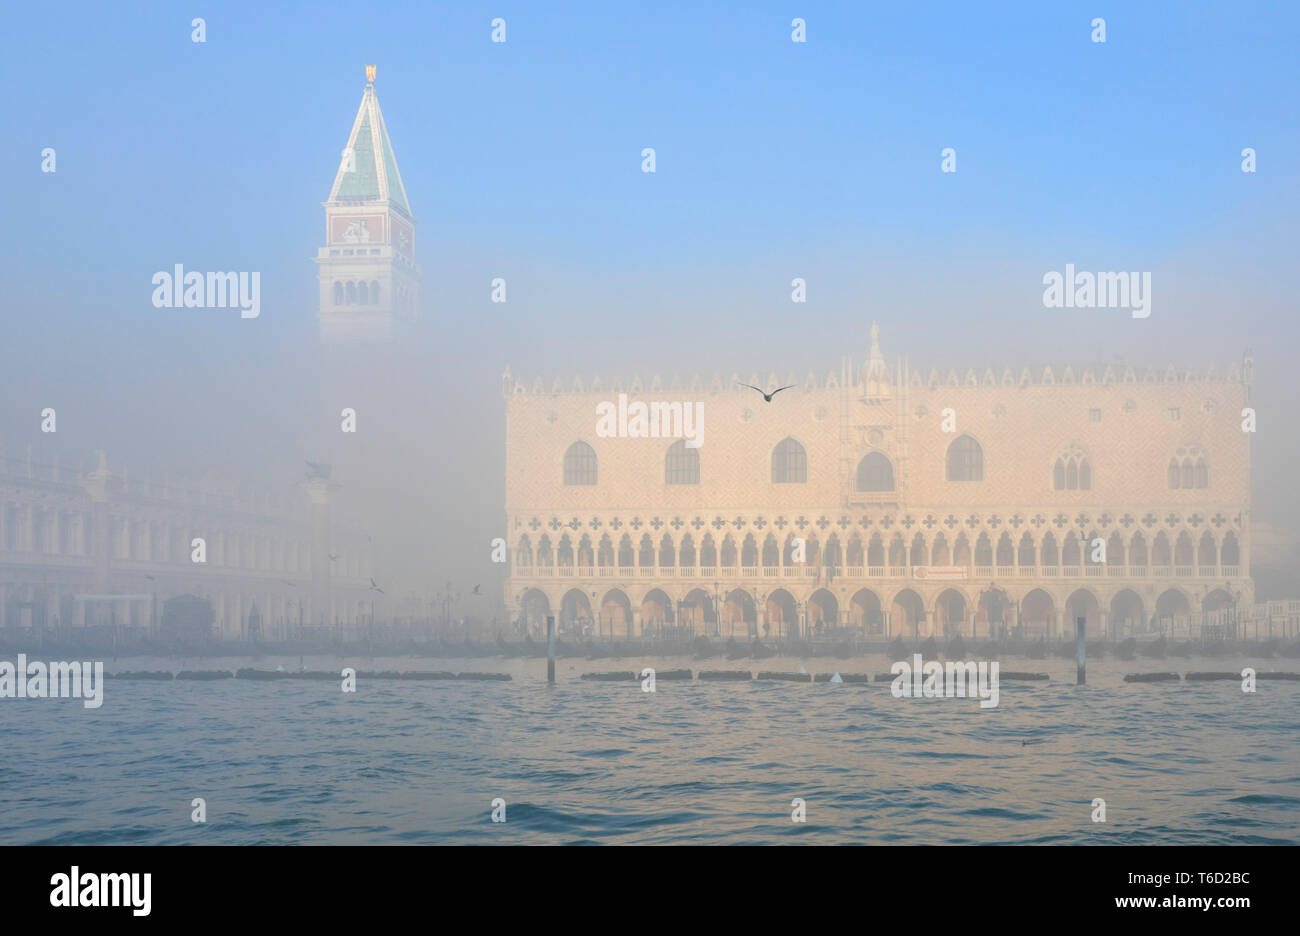 La Basílica de San Marcos, la Plaza de San Marcos (San Marcos) Venecia, Italia Foto de stock